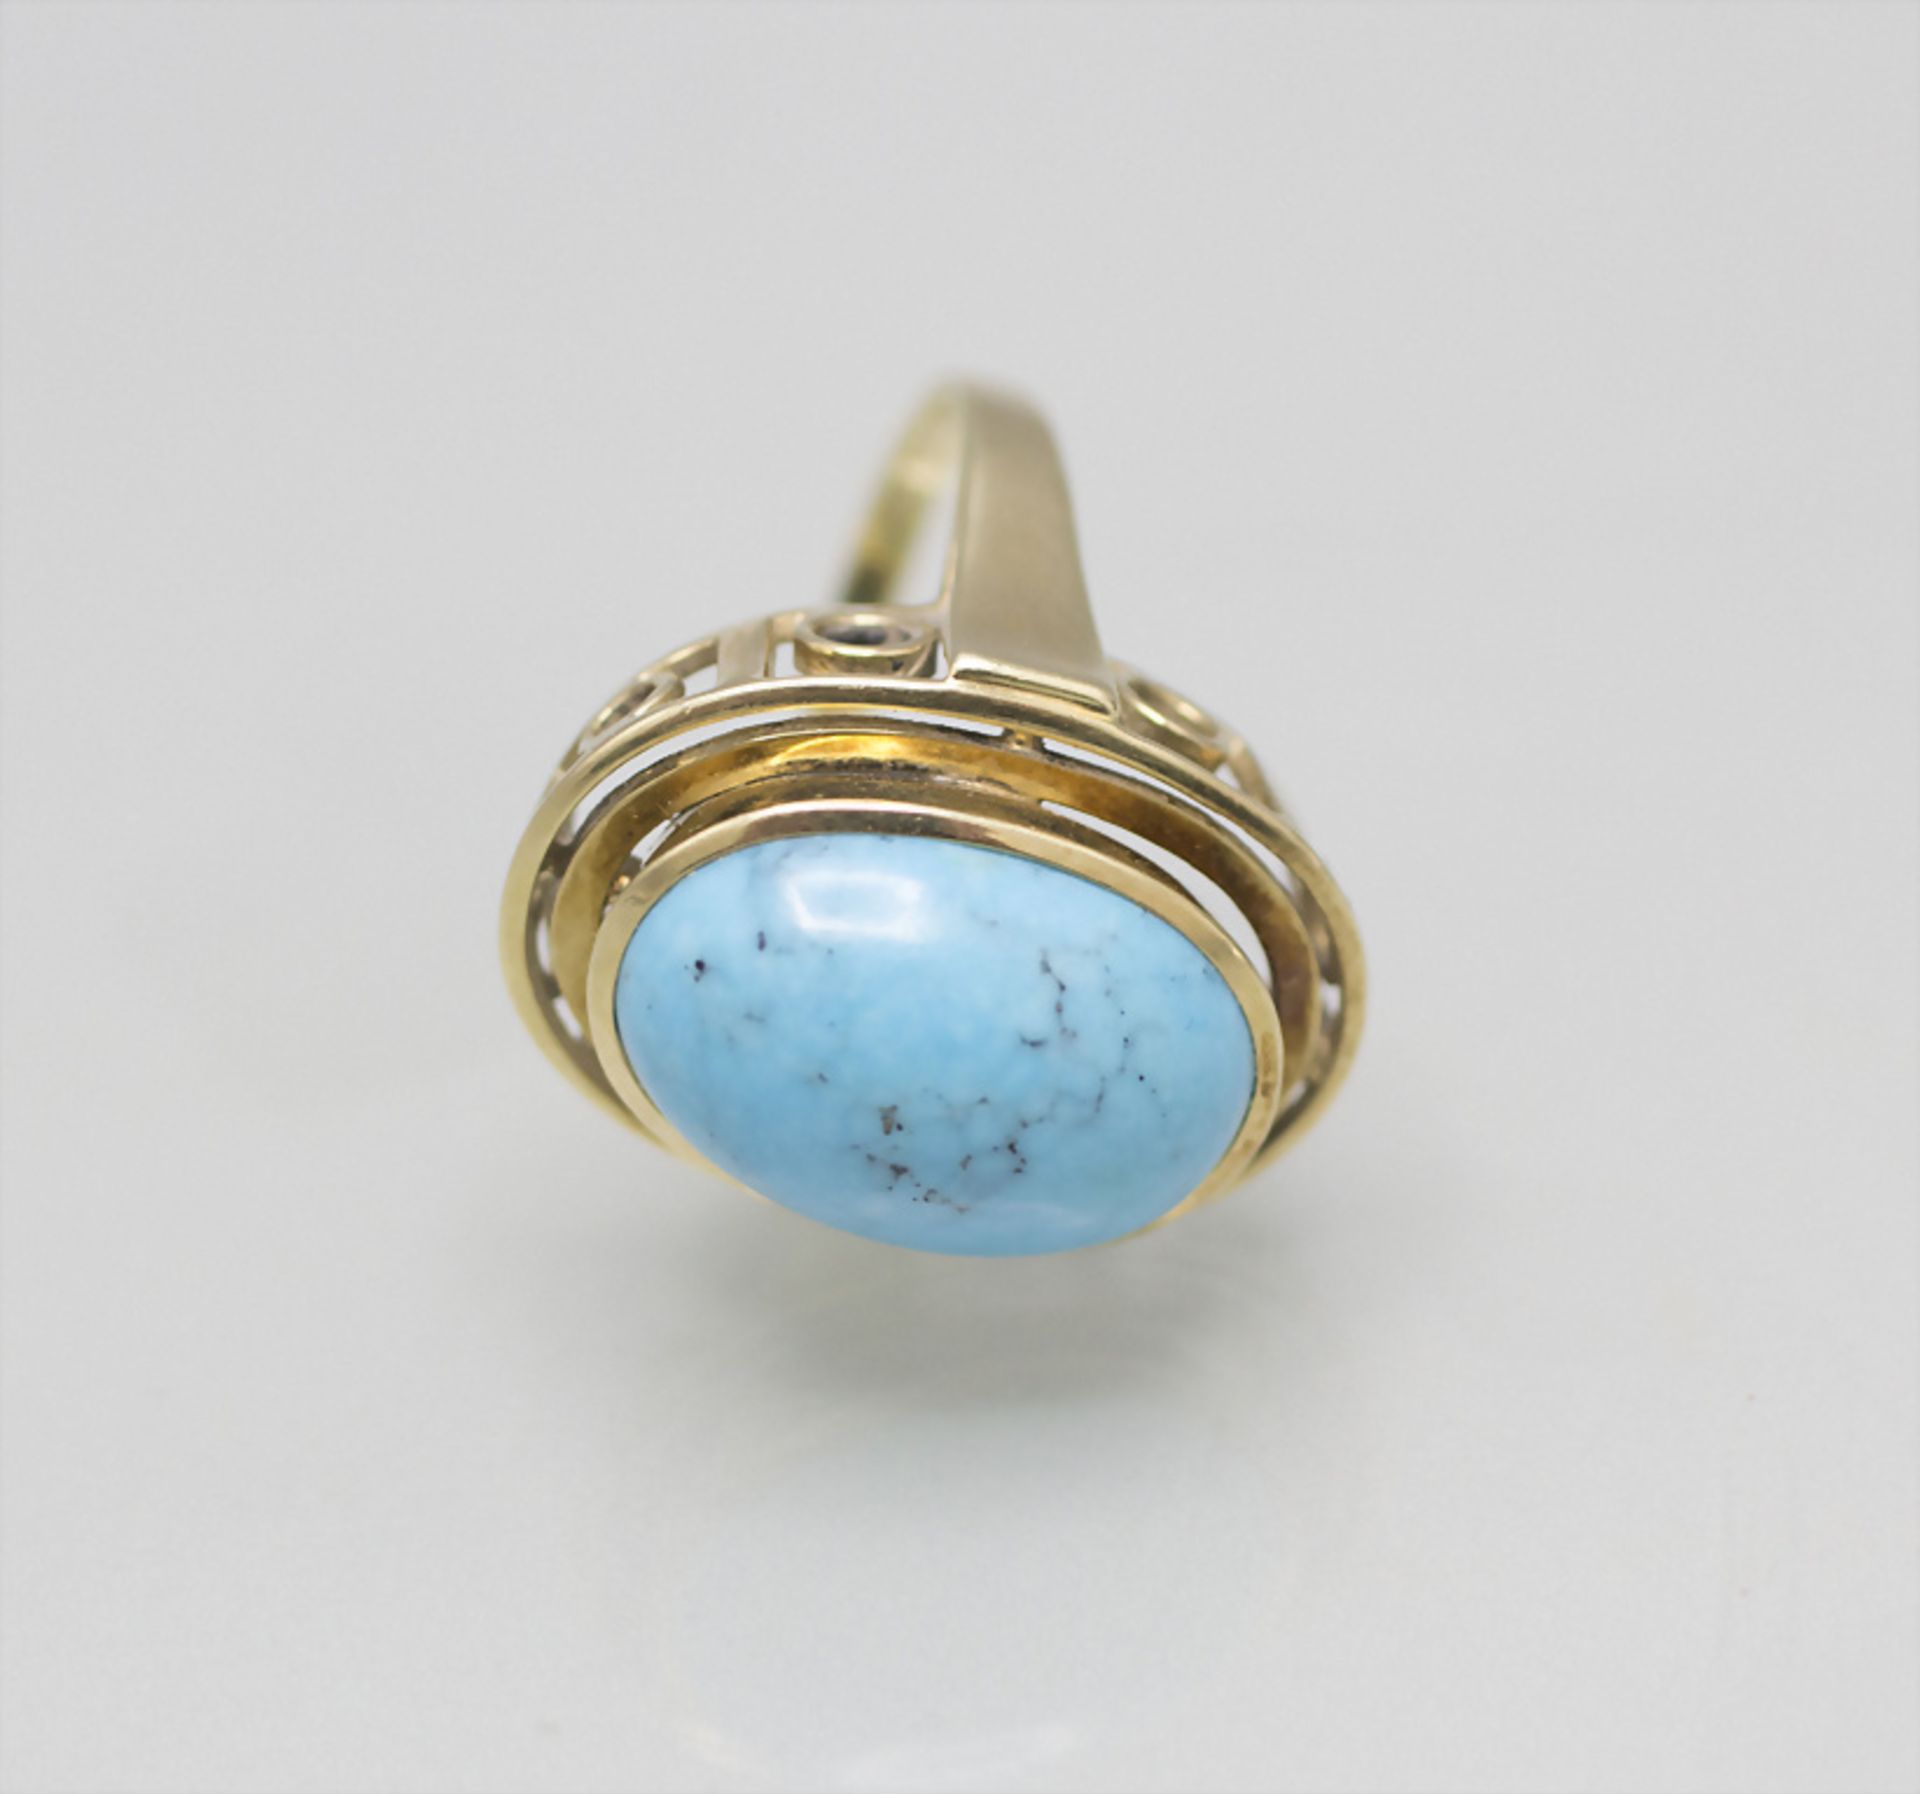 Damenring mit Türkis / A ladies 14 ct gold ring with turquoise